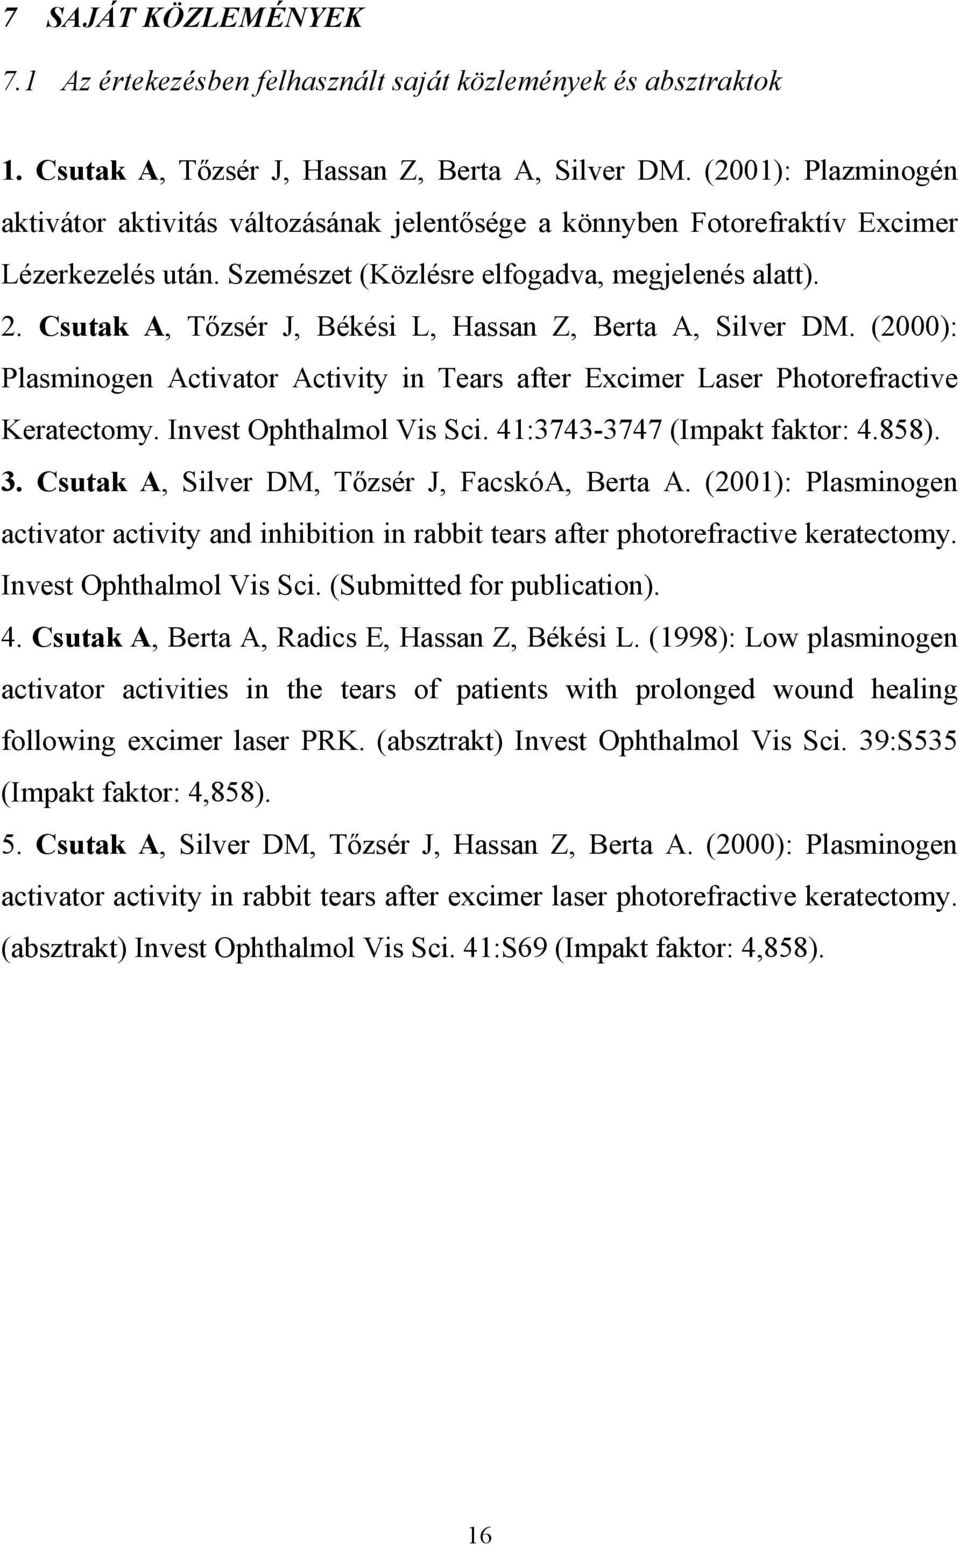 Csutak A, T zsér J, Békési L, Hassan Z, Berta A, Silver DM. (2000): Plasminogen Activator Activity in Tears after Excimer Laser Photorefractive Keratectomy. Invest Ophthalmol Vis Sci.